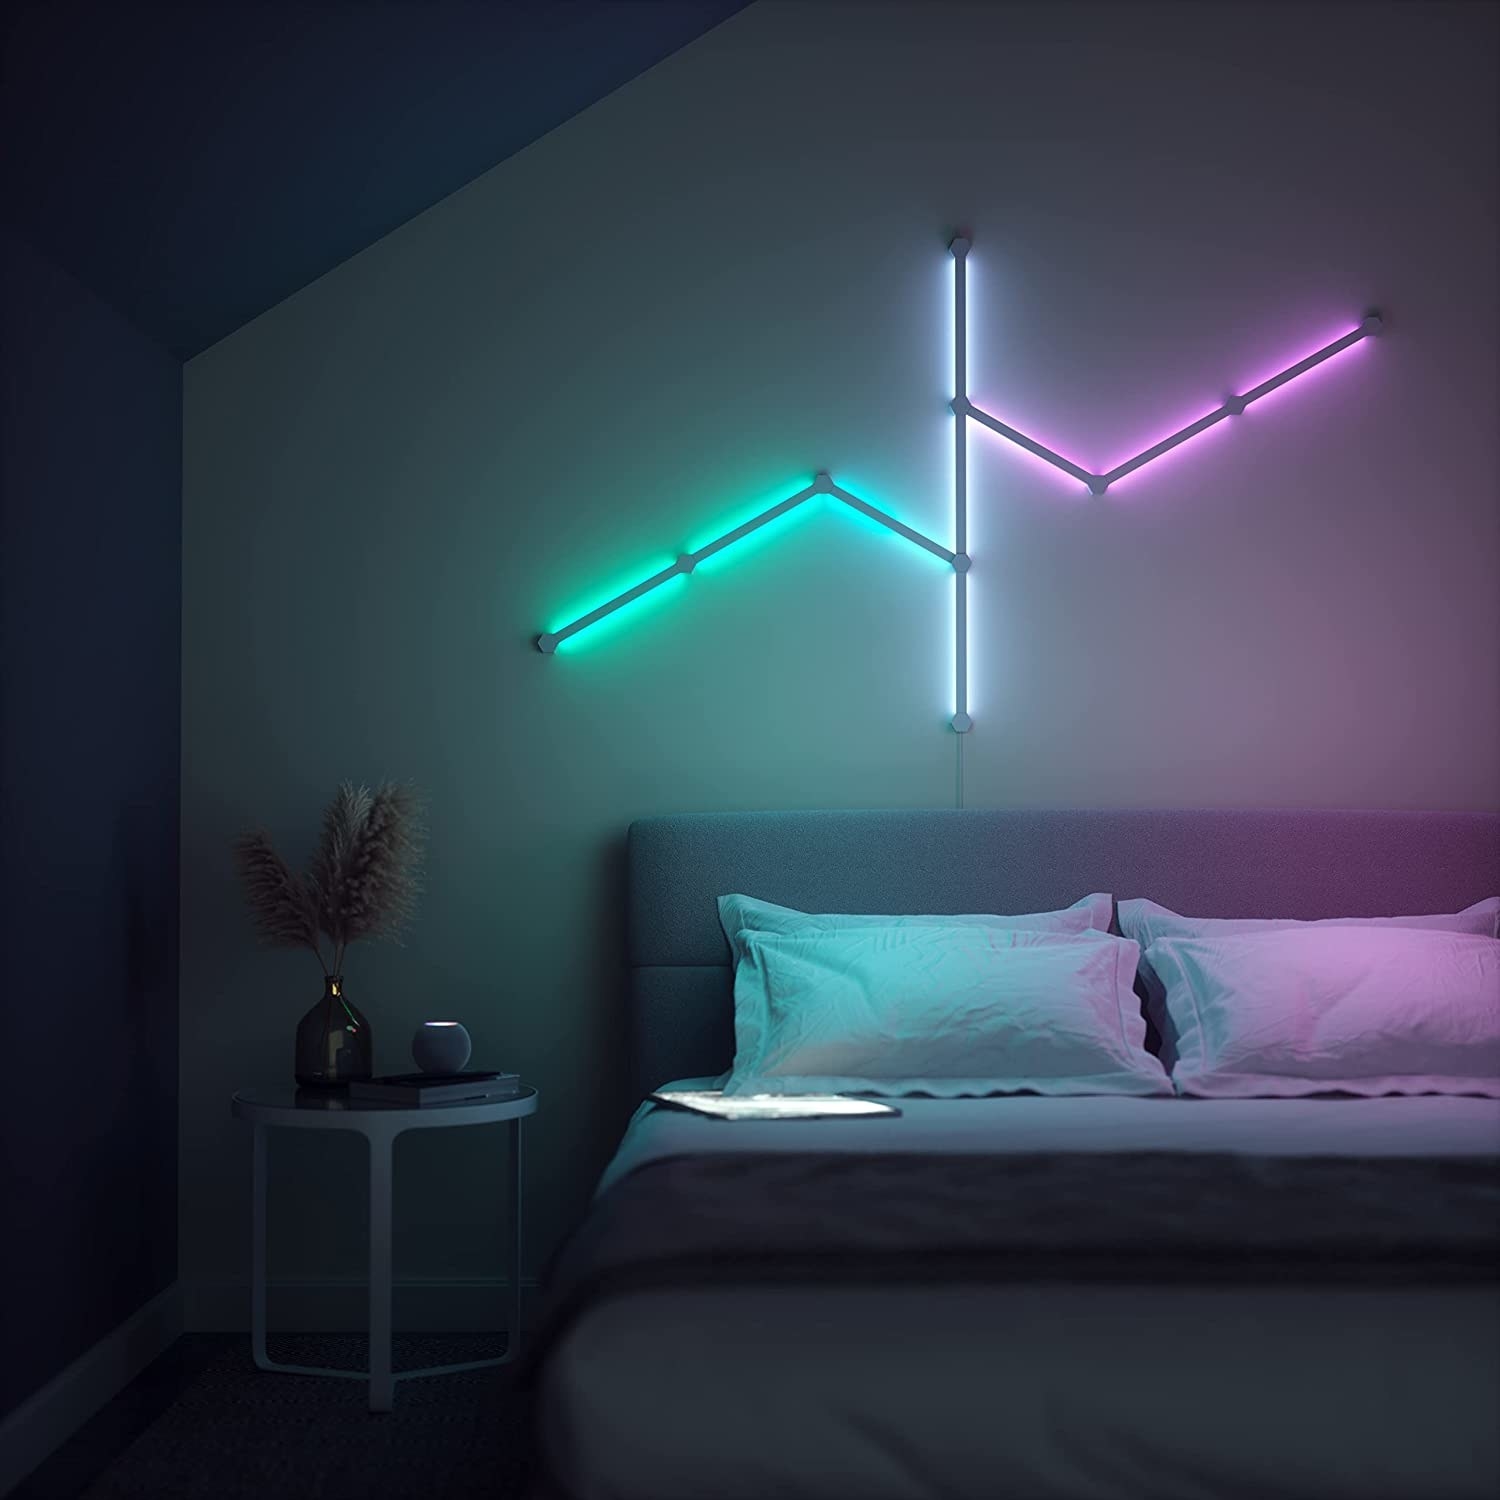 a nanoleaf light arranged on a wall above a bed